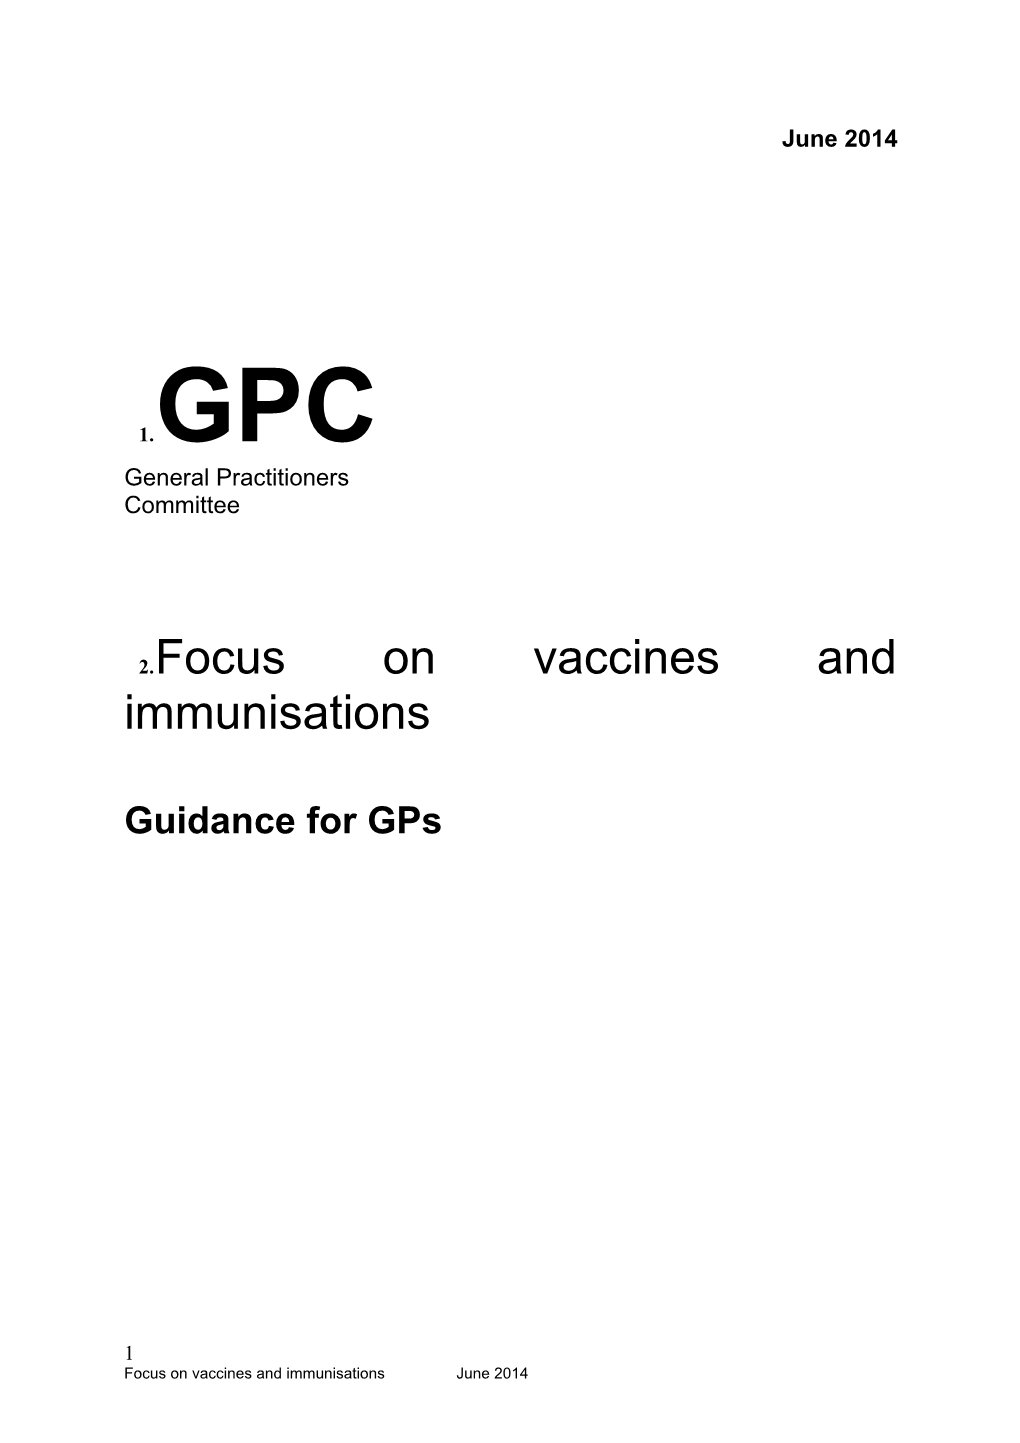 Focus on Vaccines and Immunisations